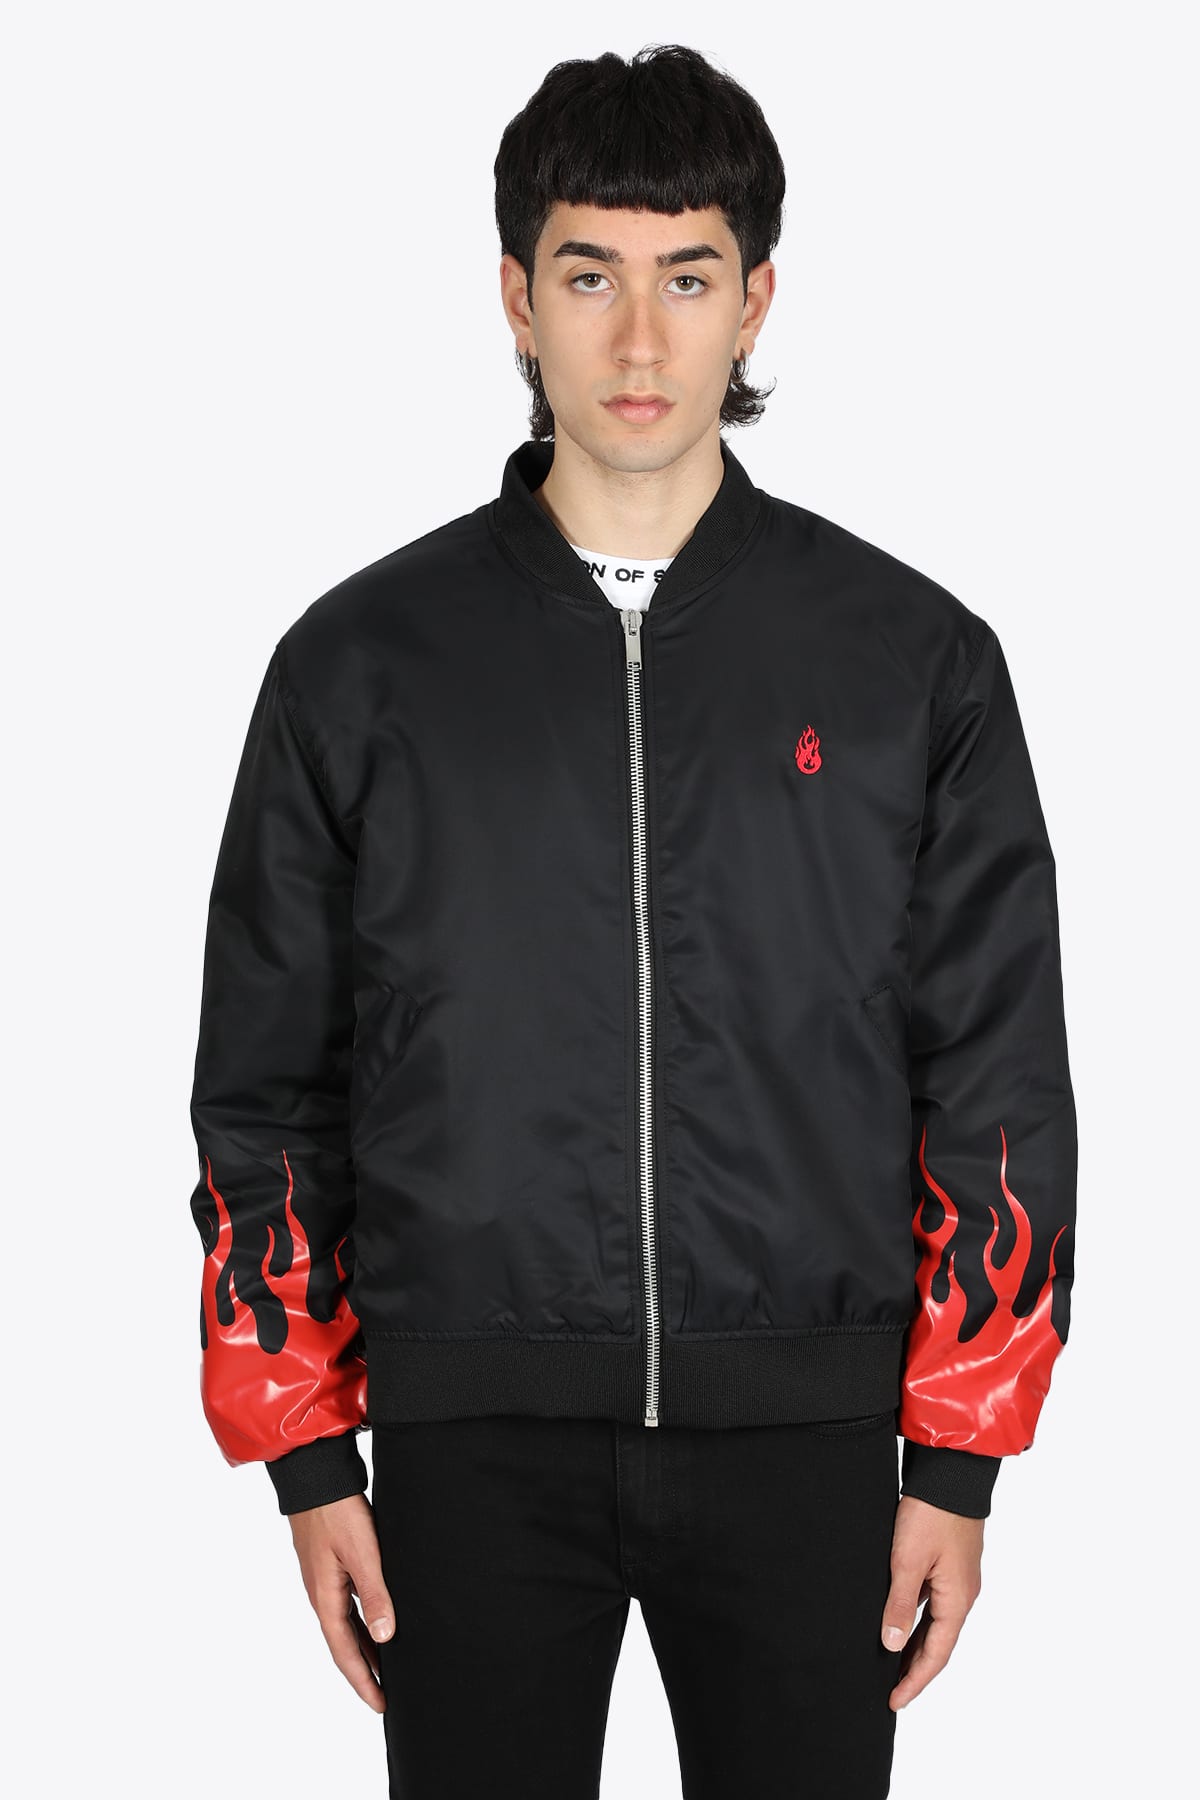 Vision of Super Vos/bomberflred Nylon Black nylon bomber jacket with red flames